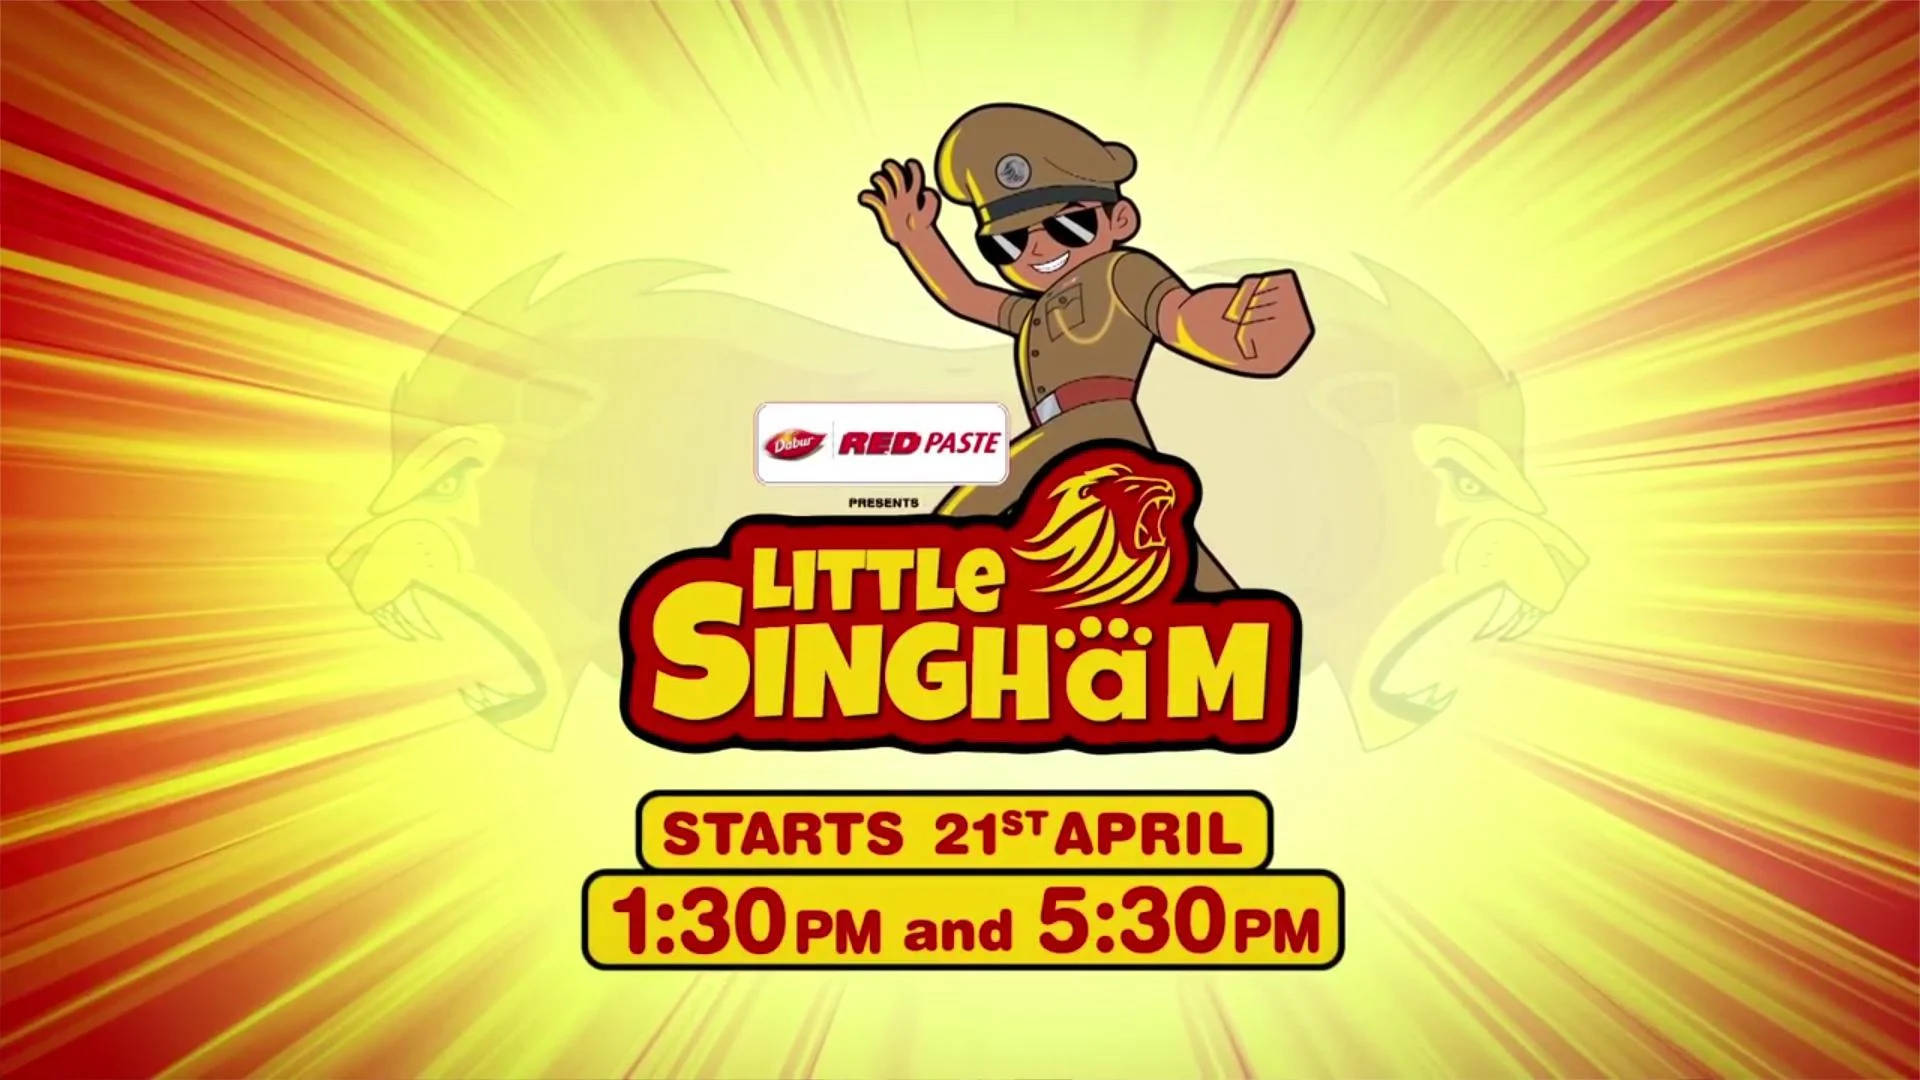 Little Singham Show Schedule Wallpaper